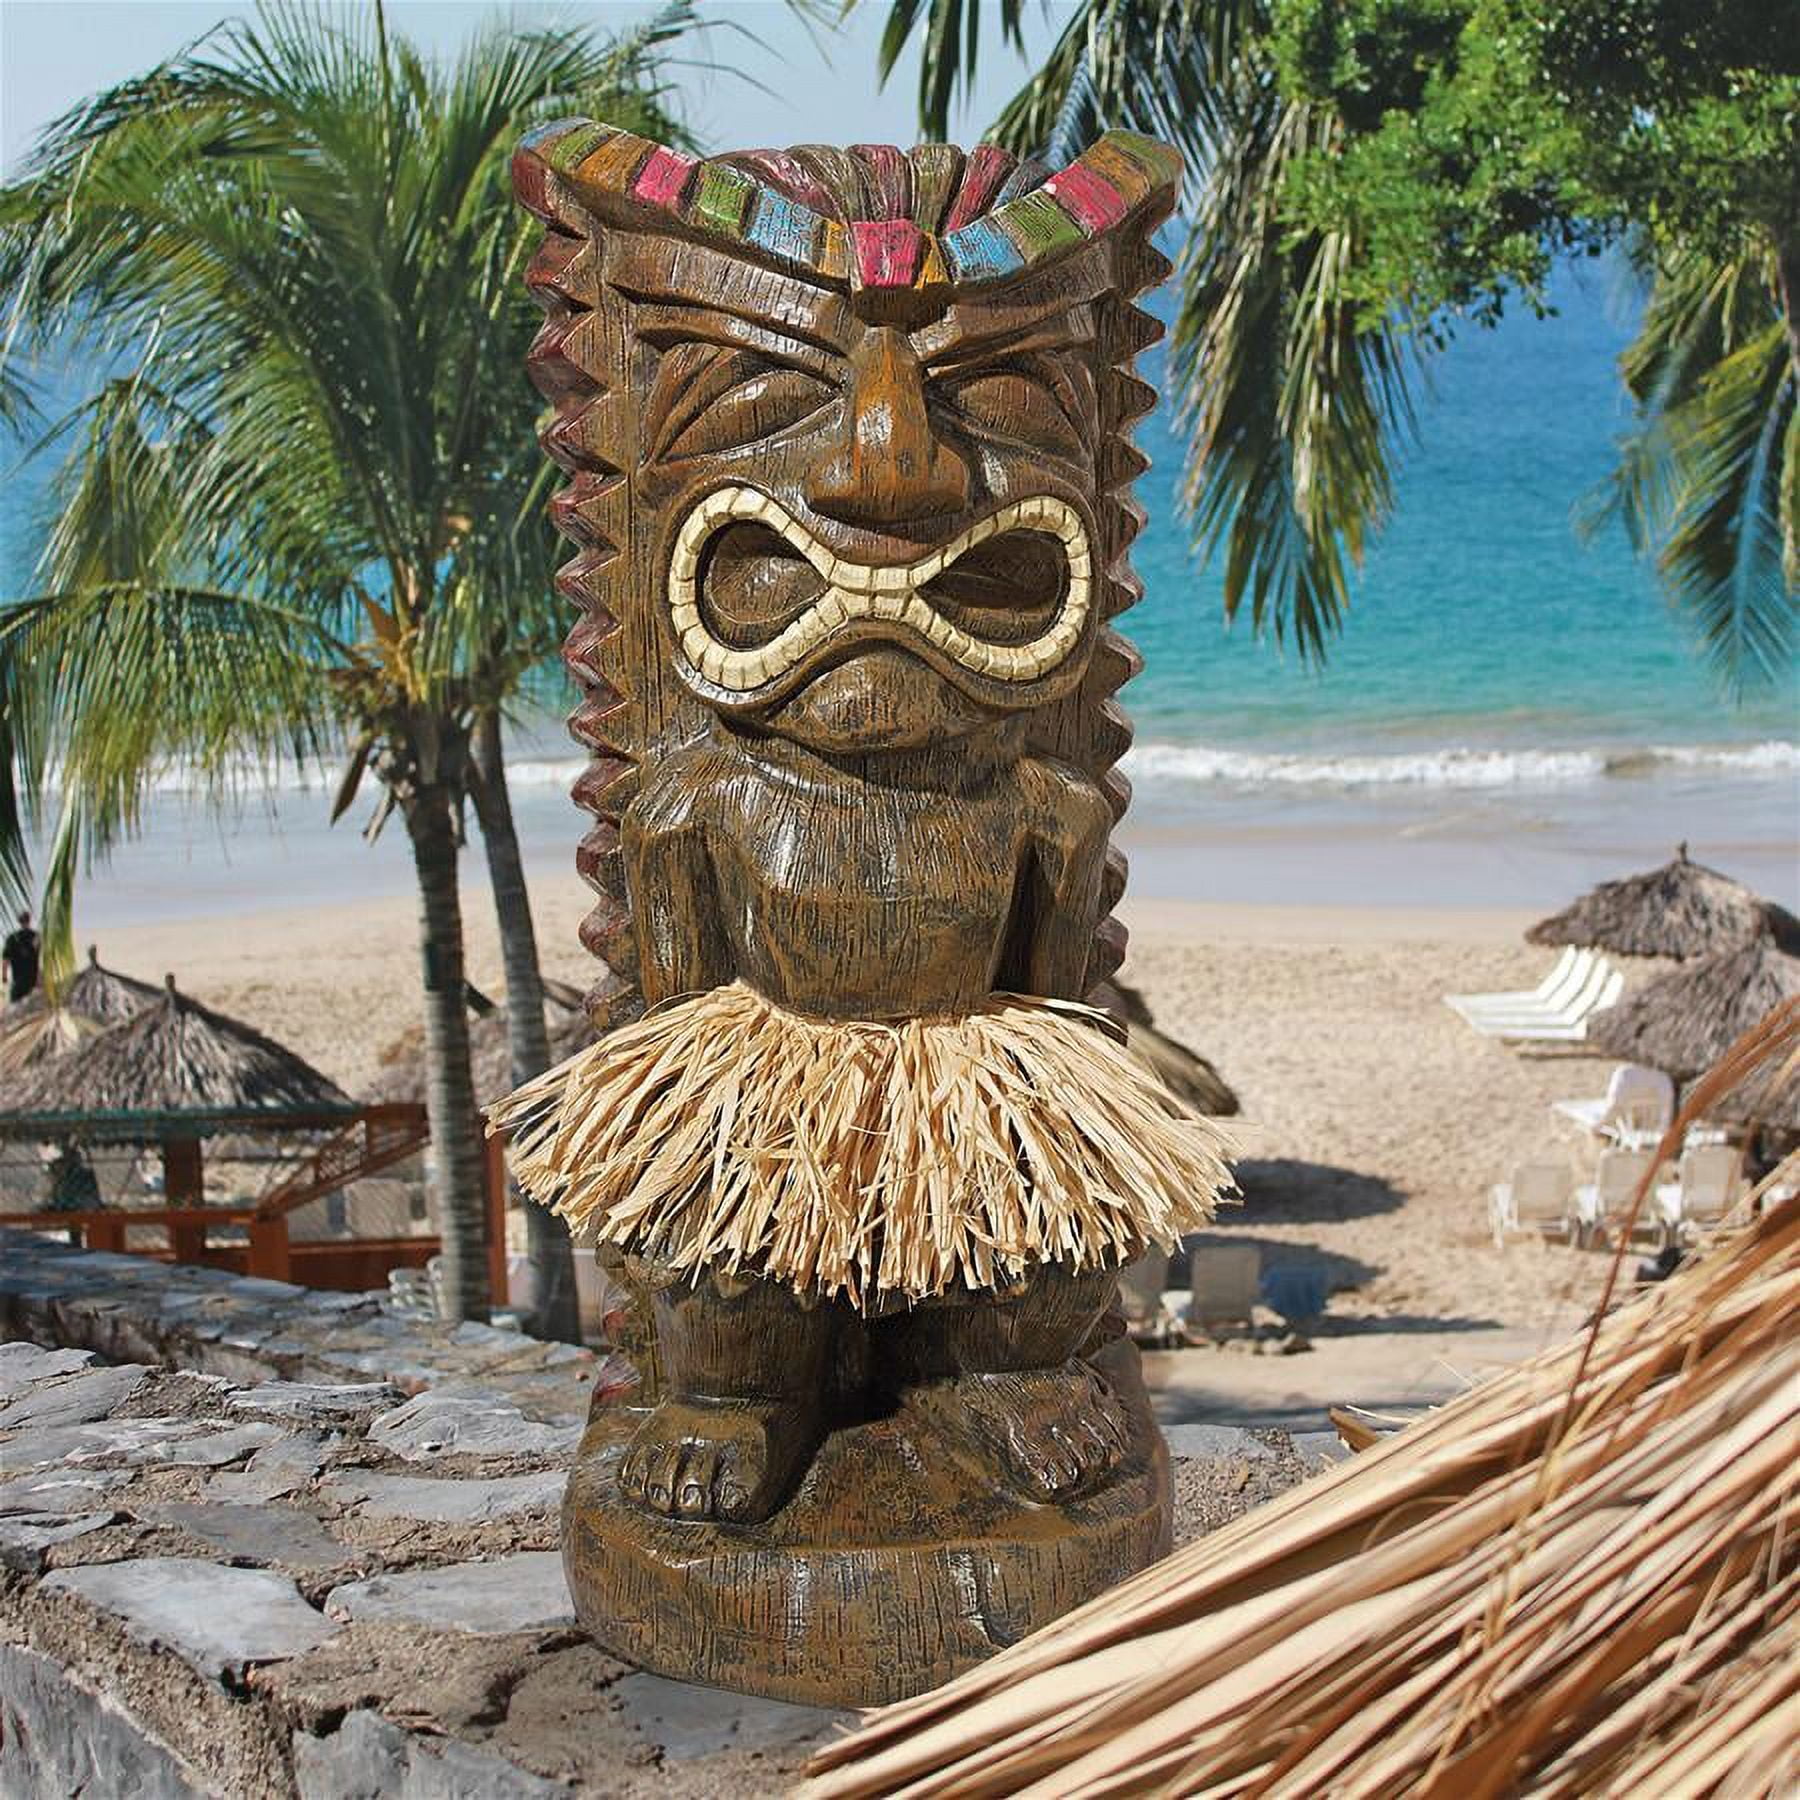 Foam Tiki Totem Pole - Tiki Carving - Tiki Central